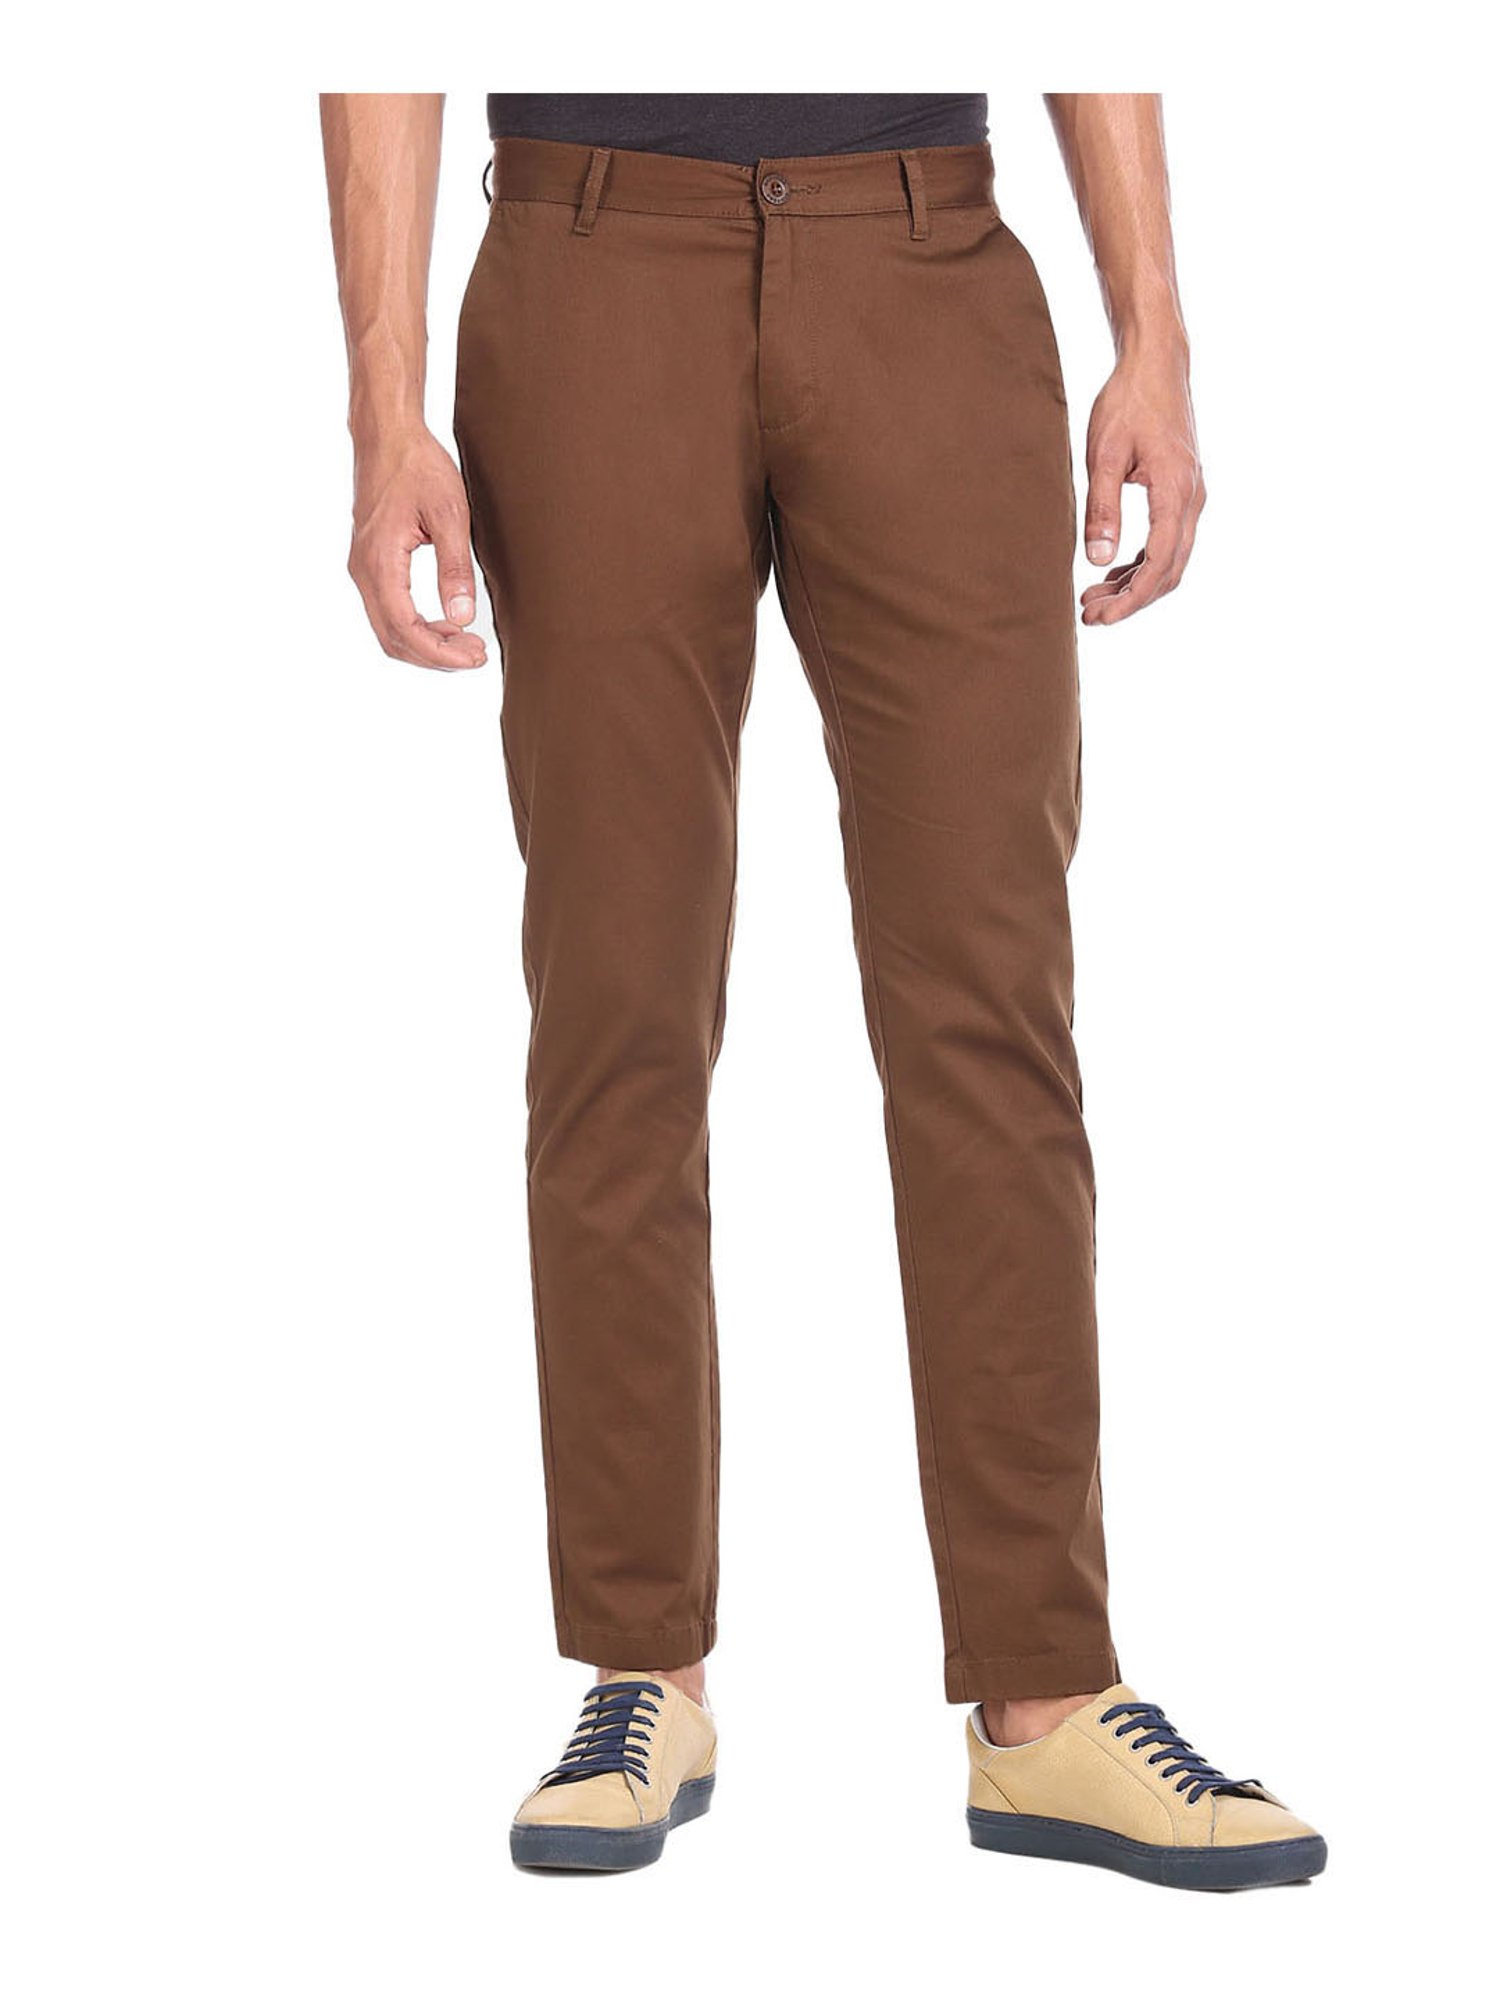 Buy Brown Trousers  Pants for Men by Ruggers Online  Ajiocom